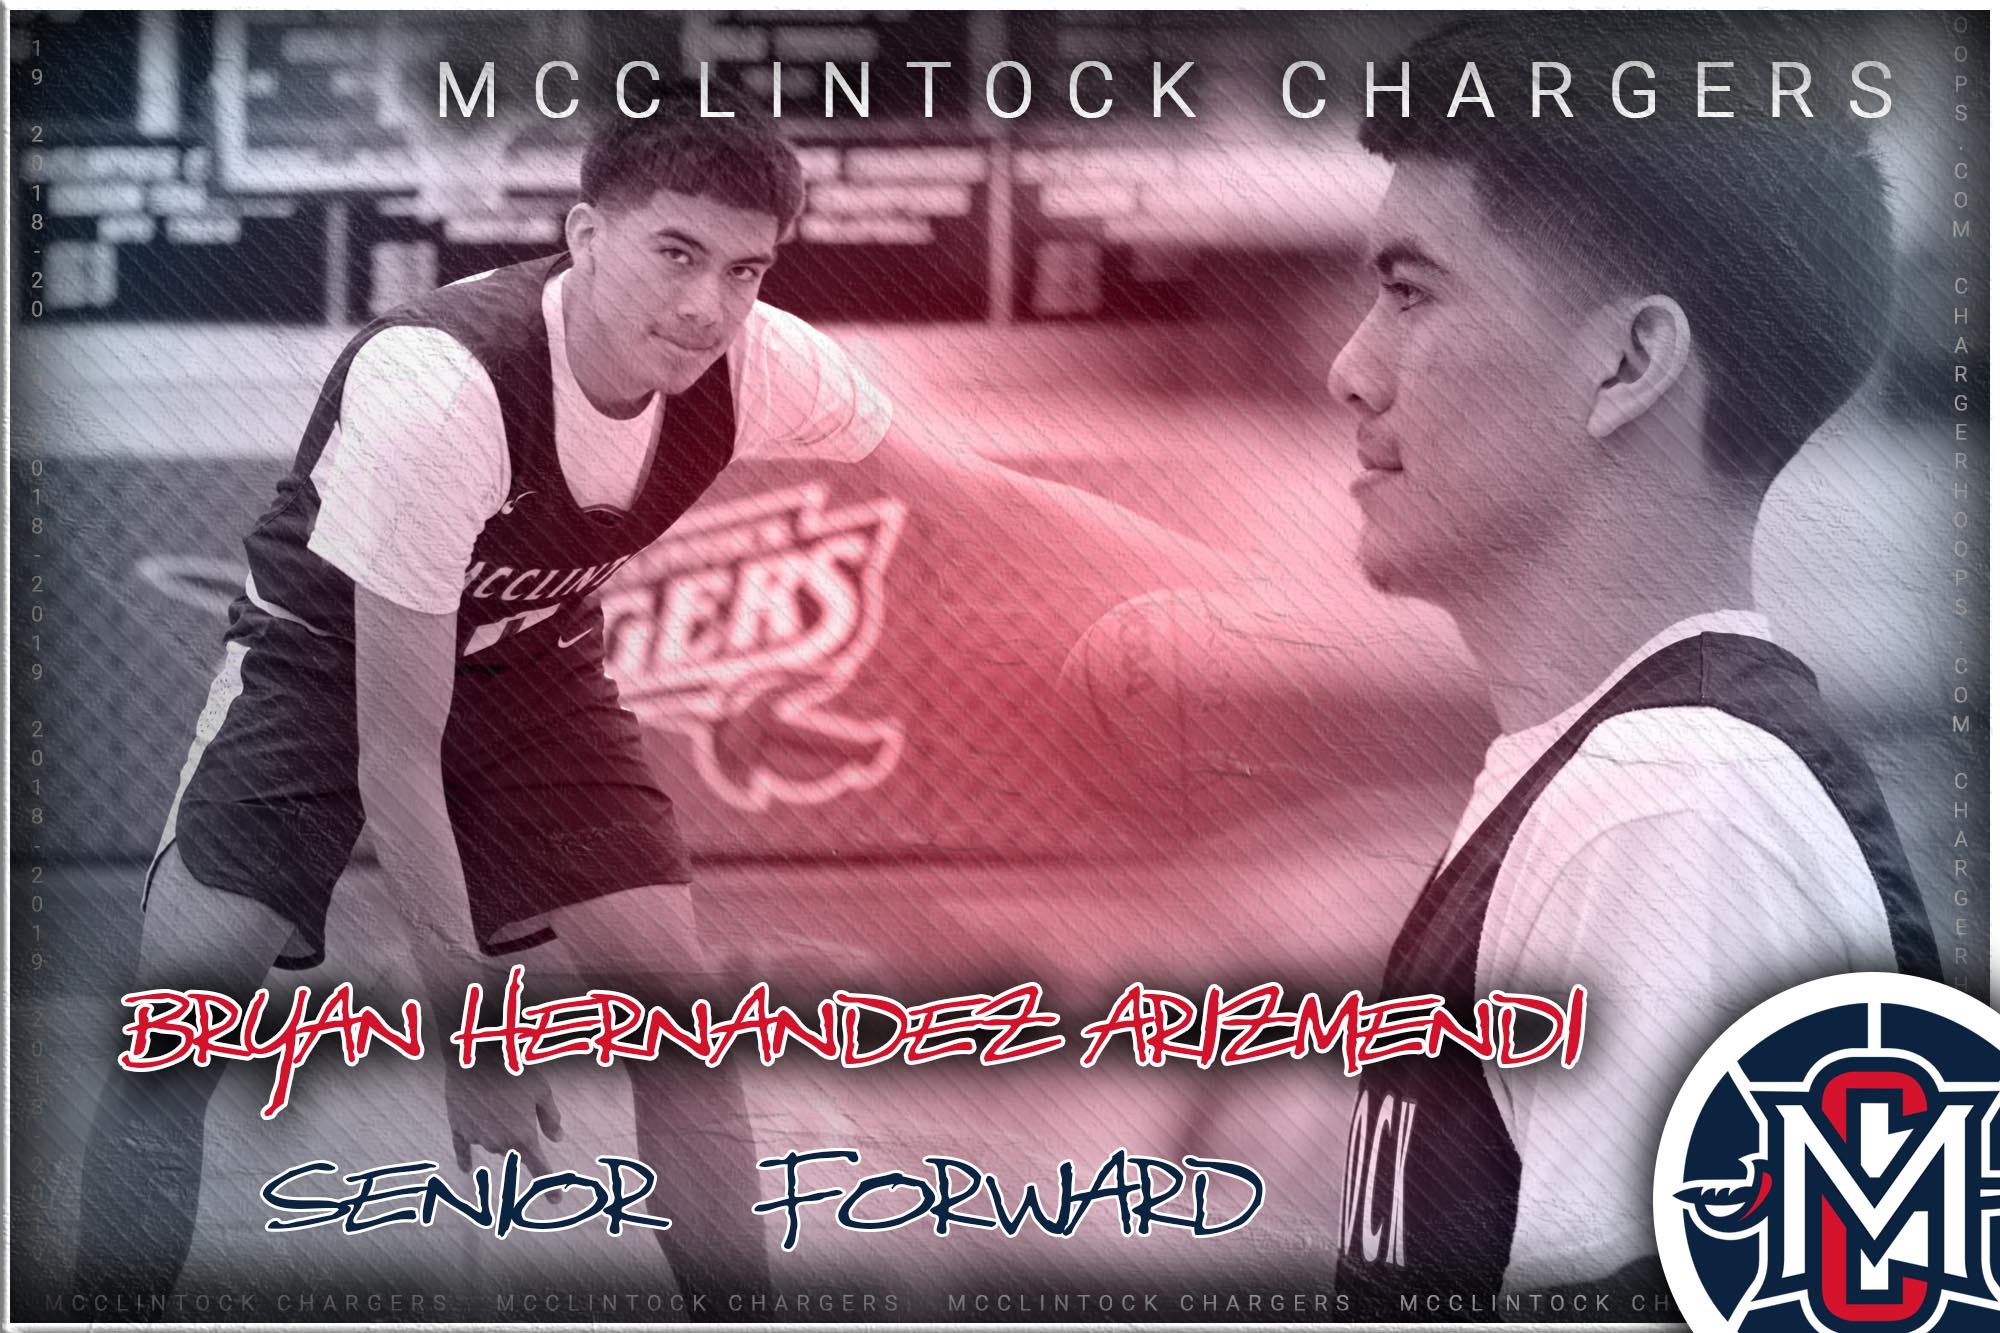 McClintock Chargers Basketball- Bryan Hernandez Arizmendi